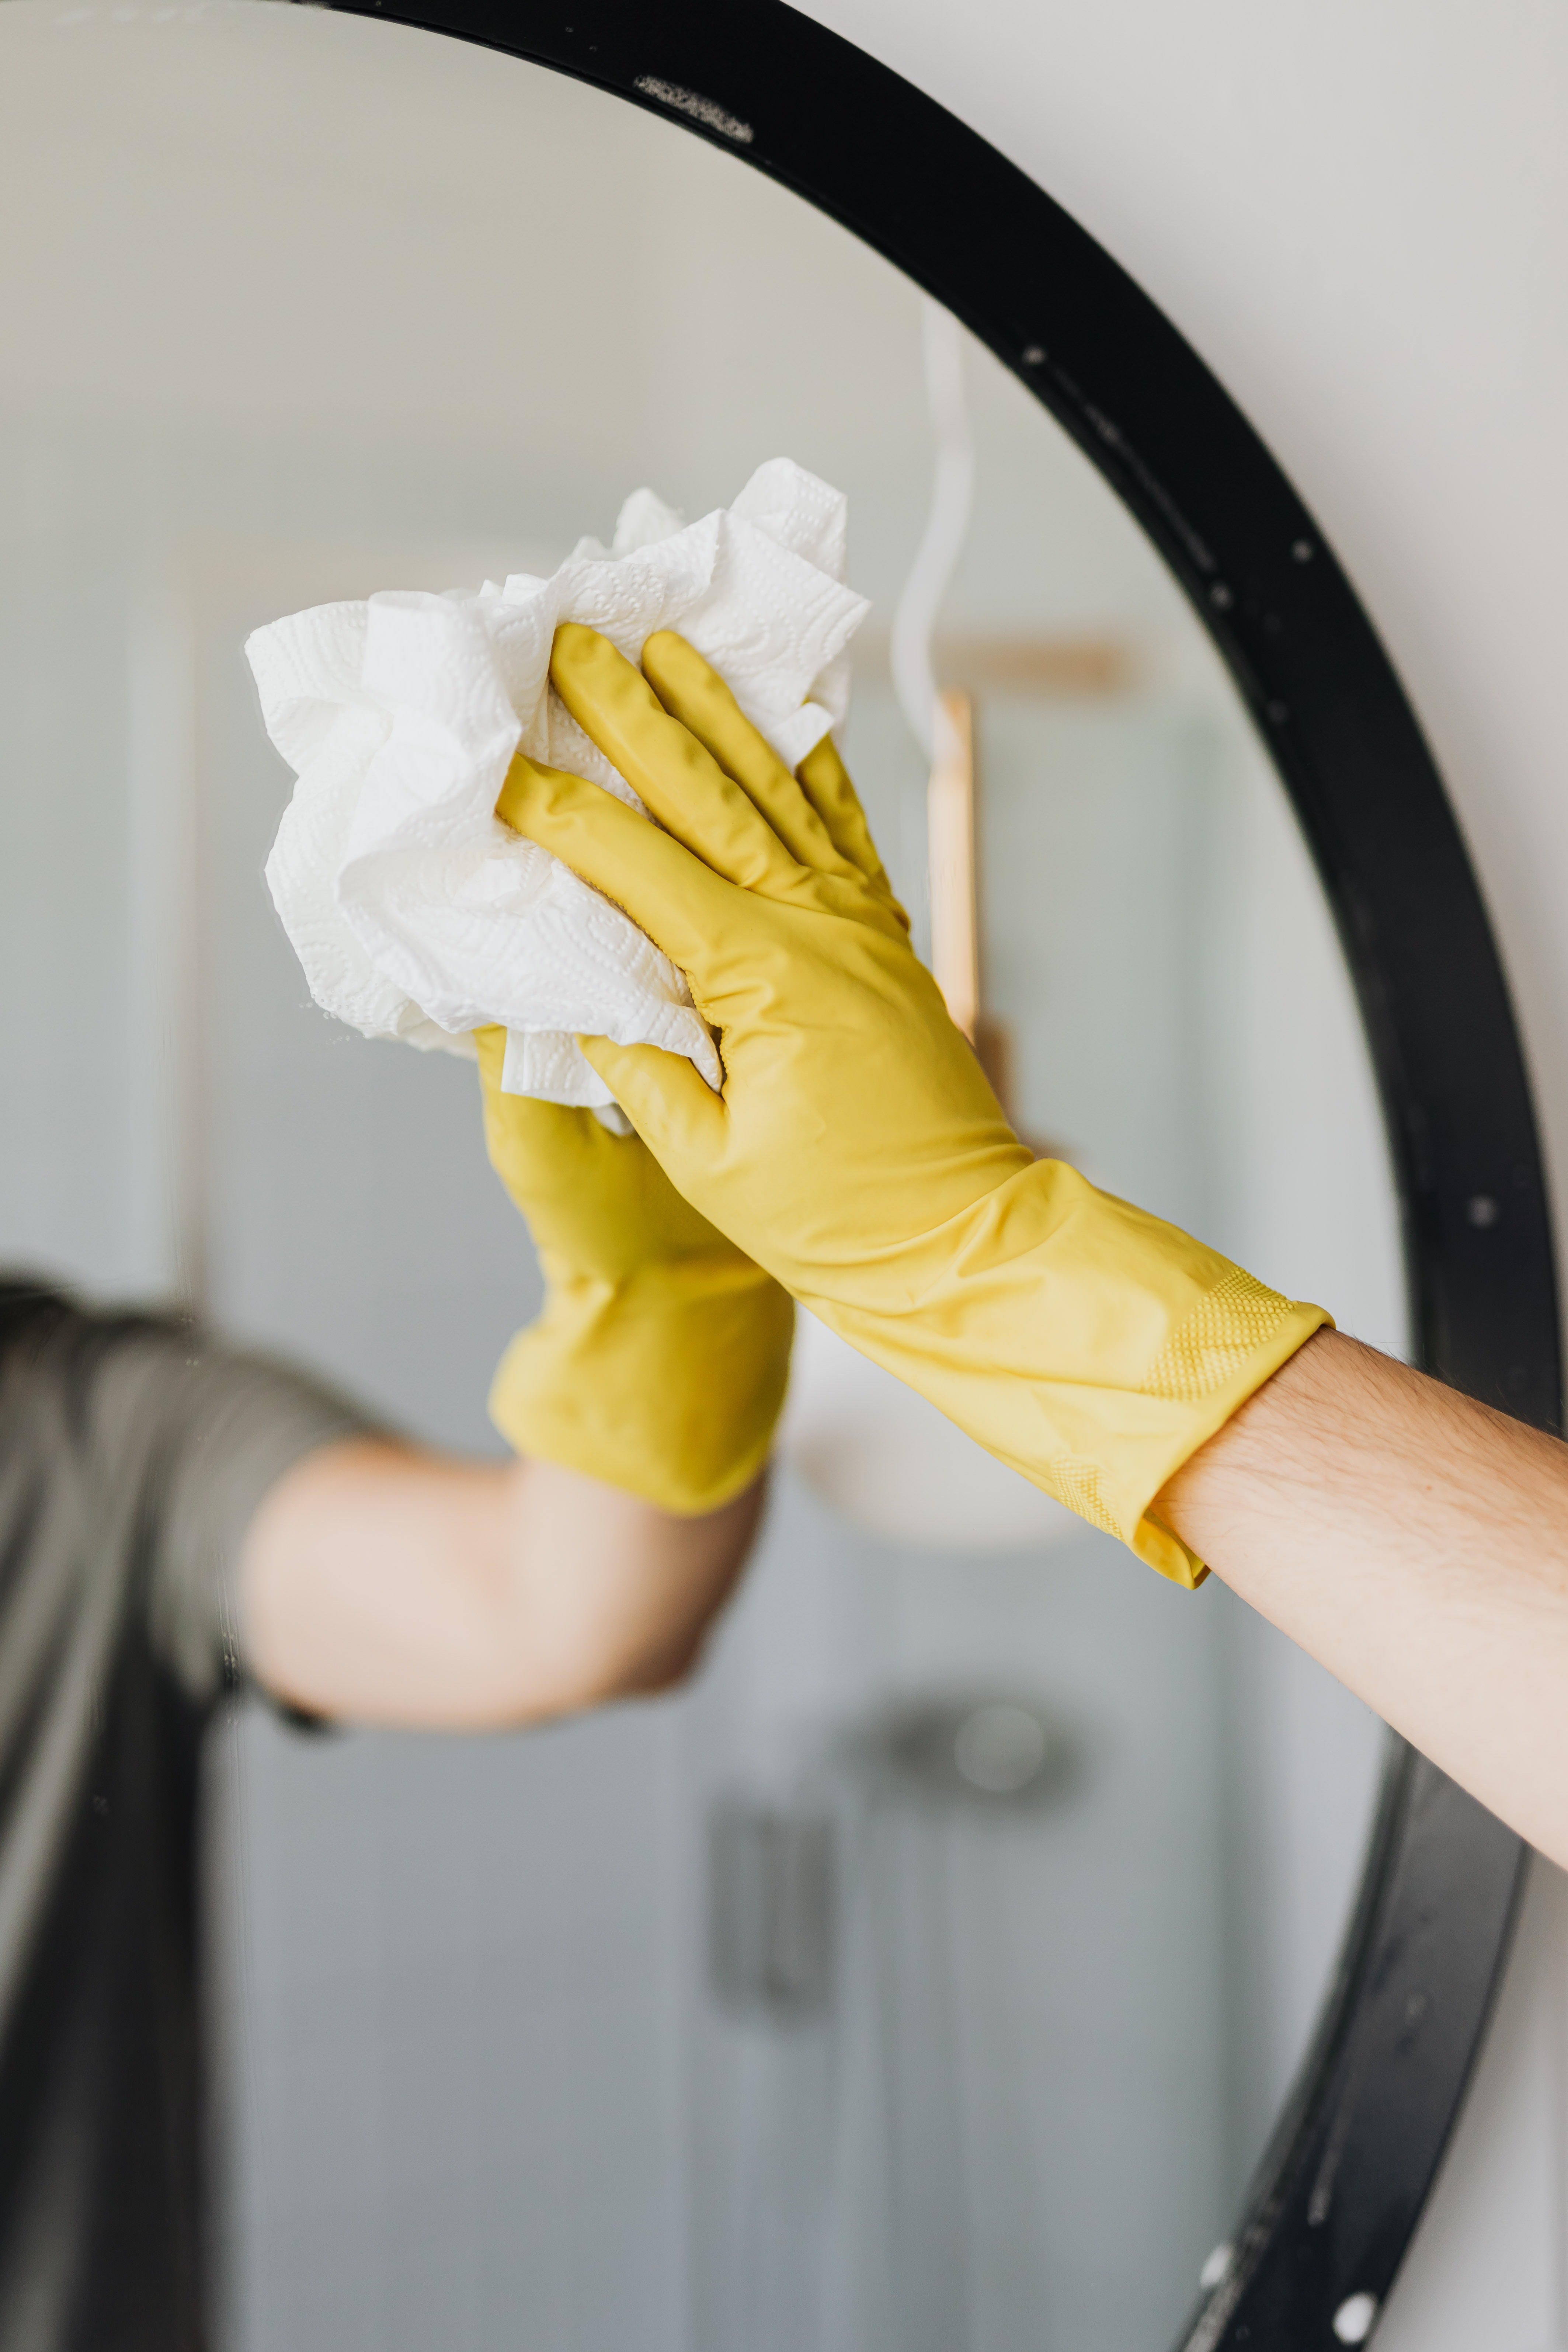 Persona limpiando un espejo. | Foto: Pexels